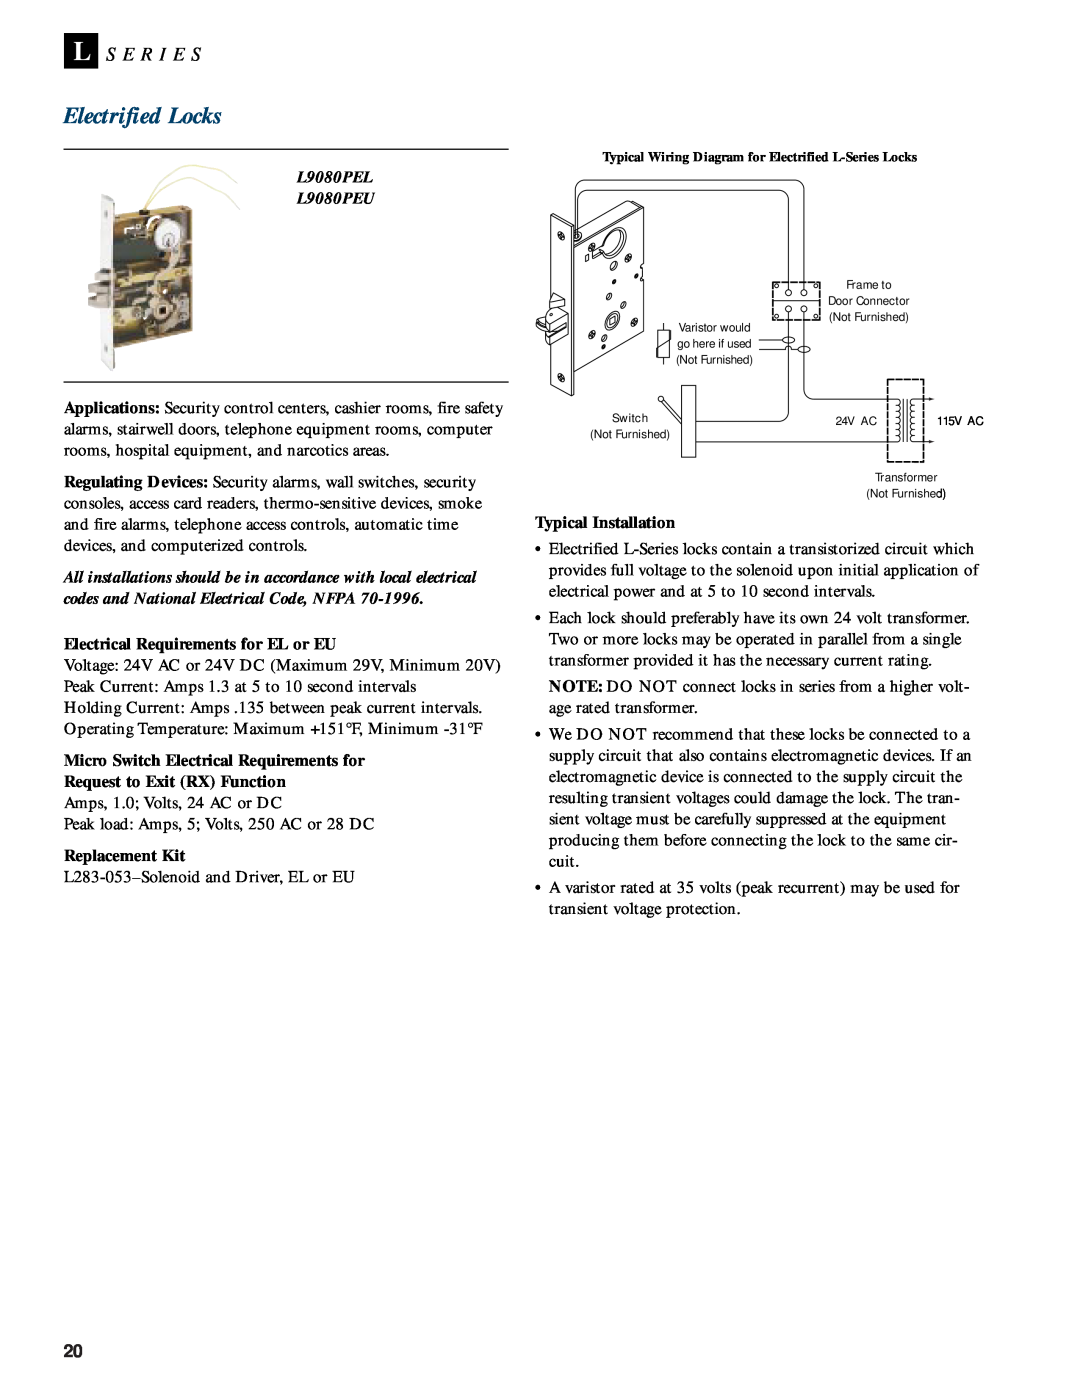 Schlage L-SERIES manual Electrified Locks, L S E R I E S, L9080PEL L9080PEU, Electrical Requirements for EL or EU 